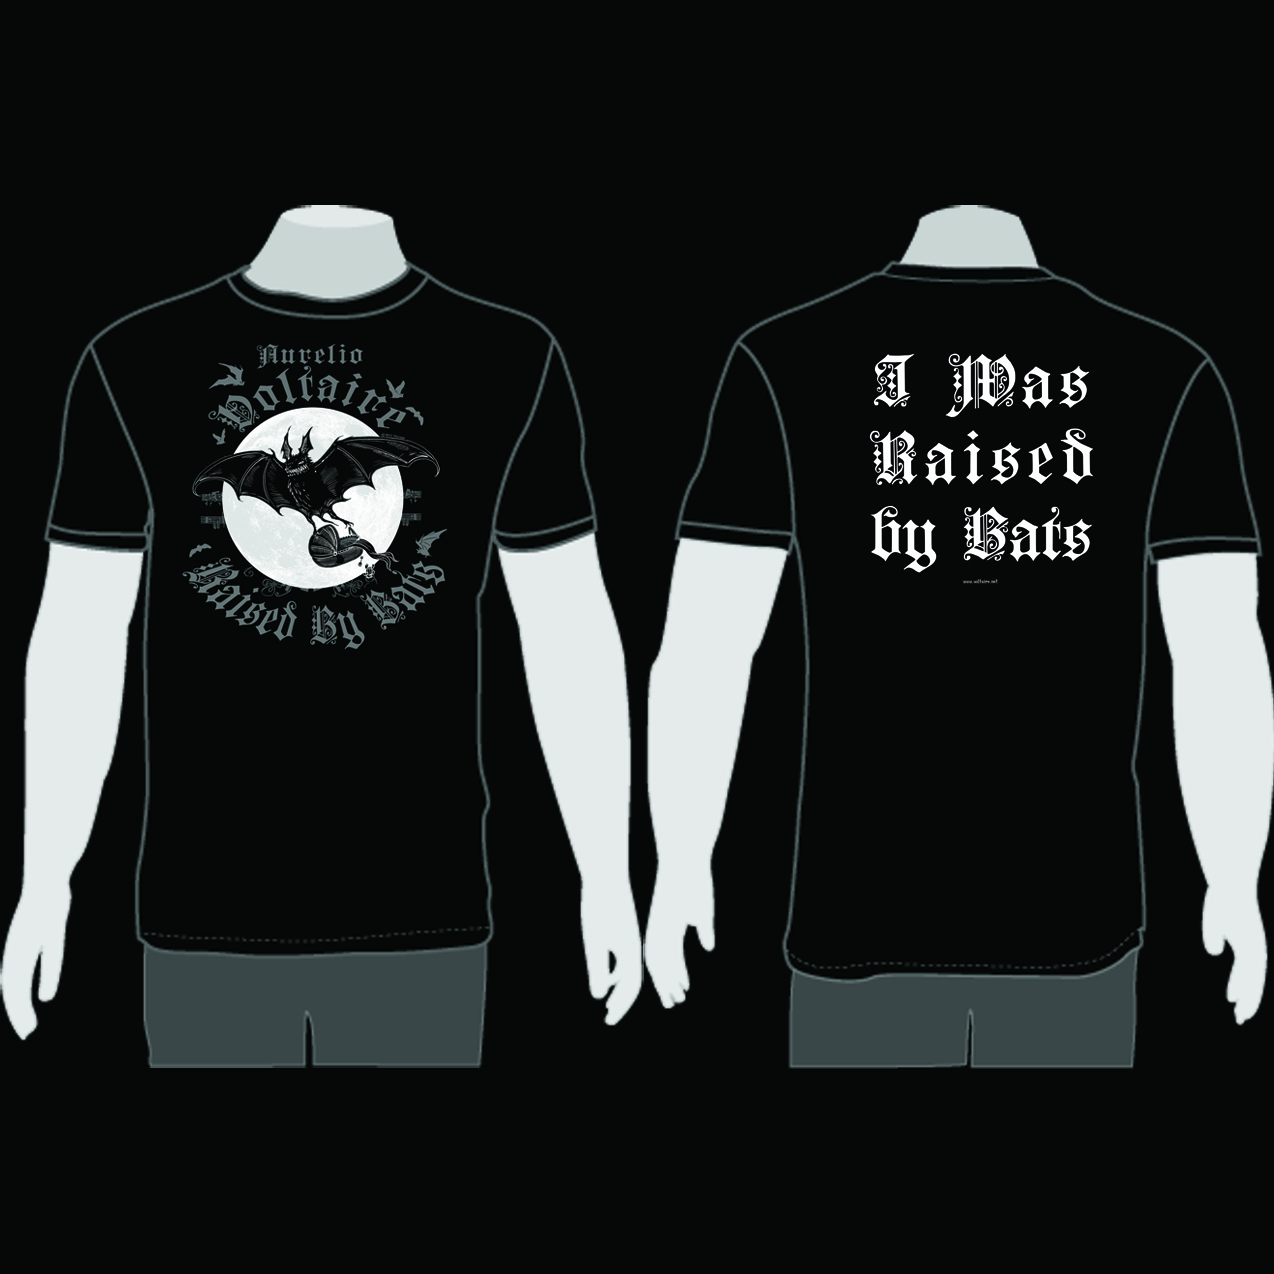 Raised By Bats Shirt - MEDIUM